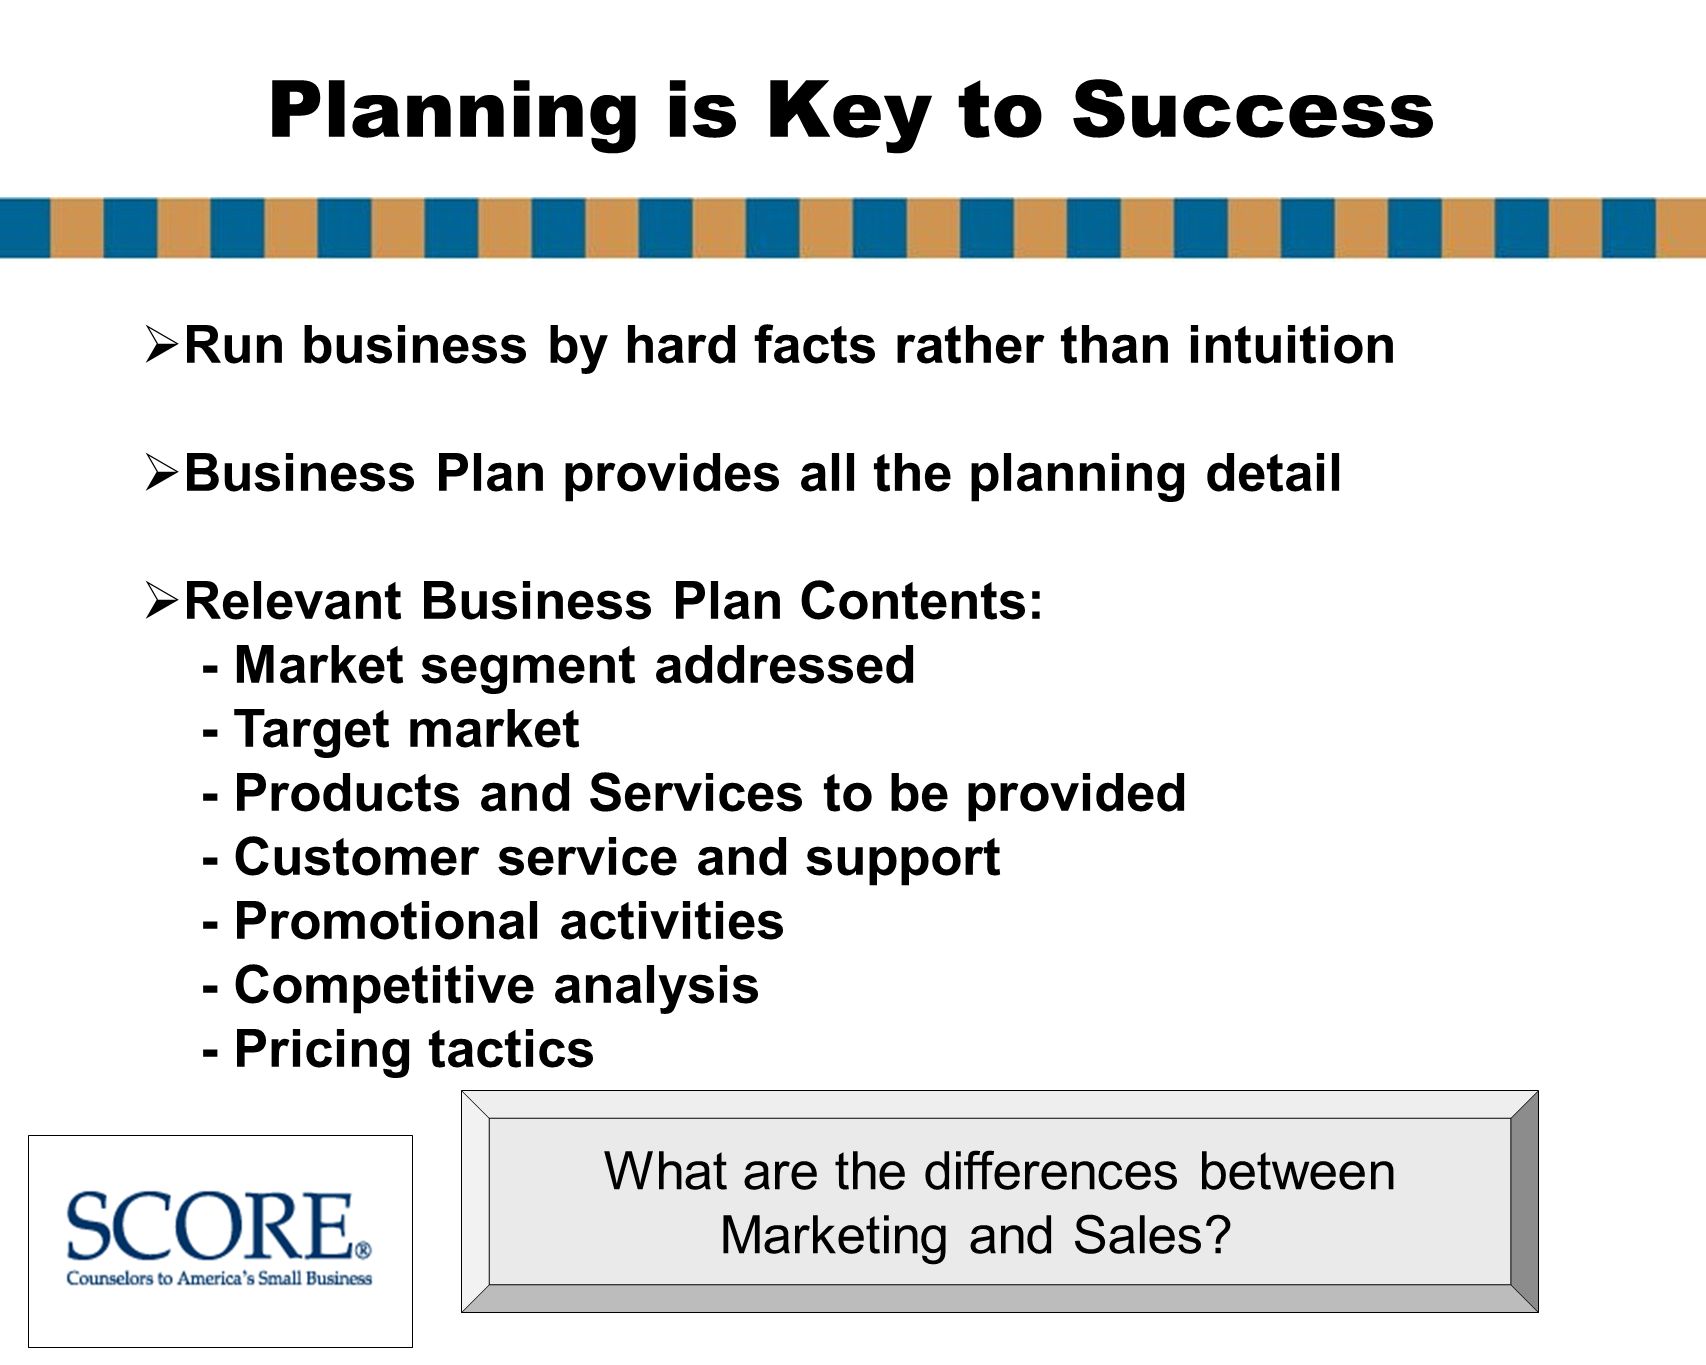 Score business plan